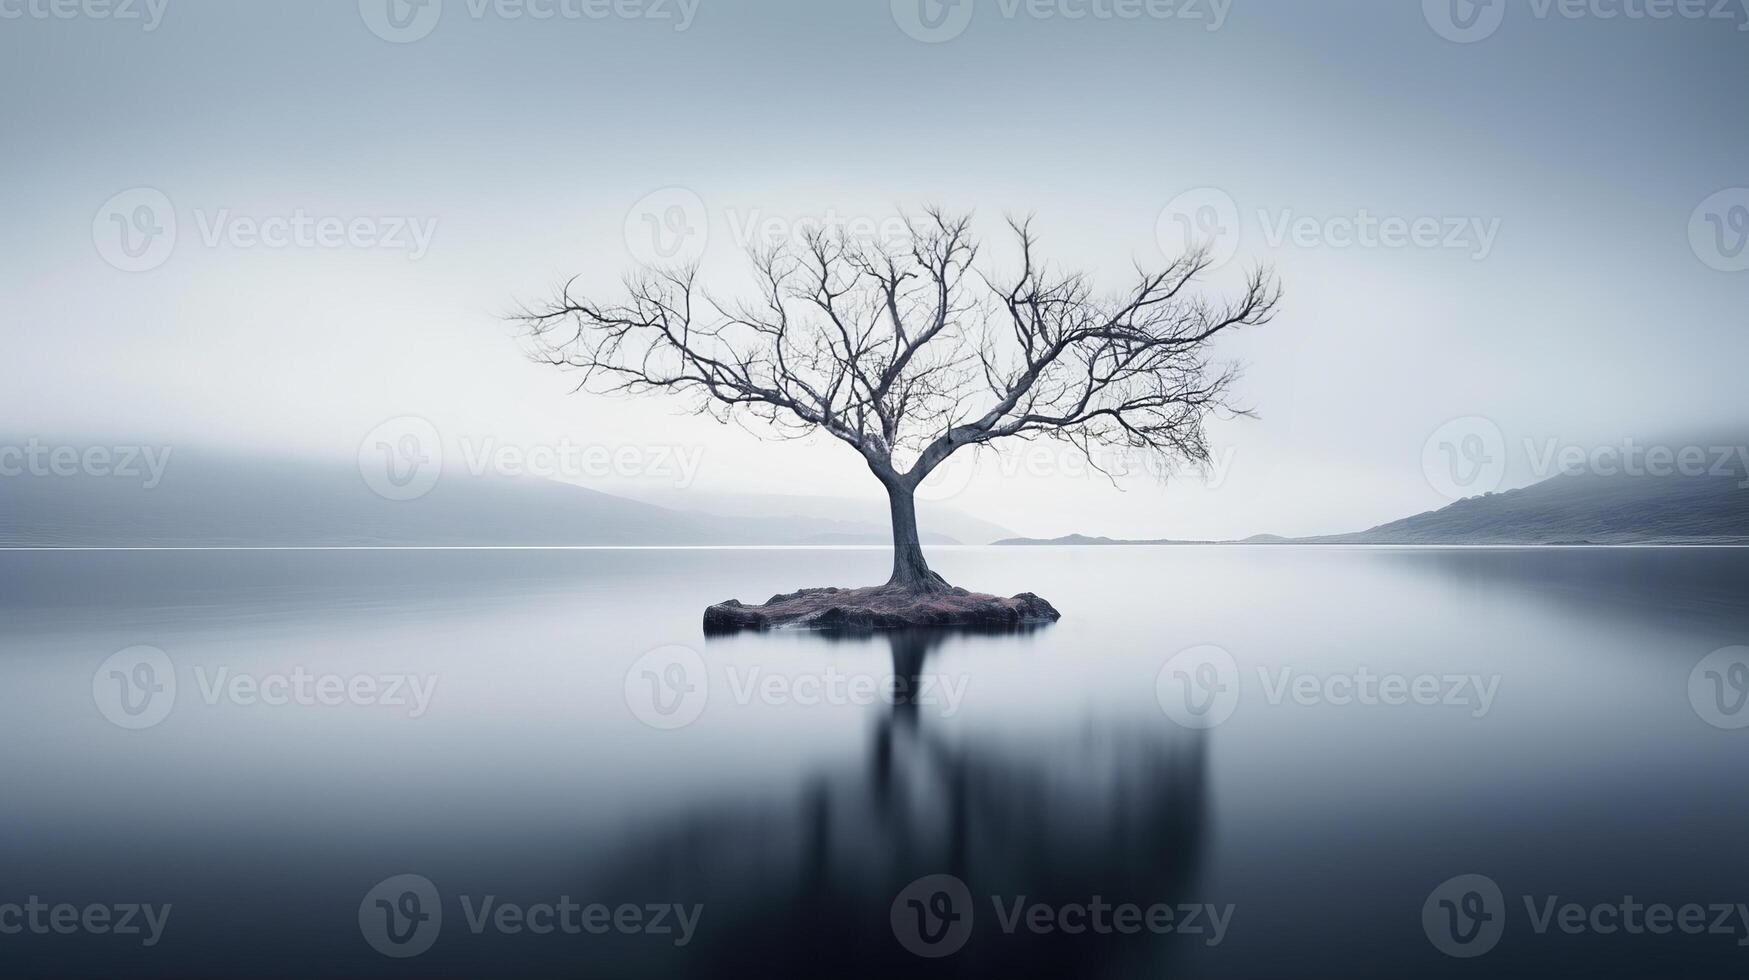 AI generated Lonely tree in midst of bleak lake creates melancholic atmosphere evoking sense of isolation photo